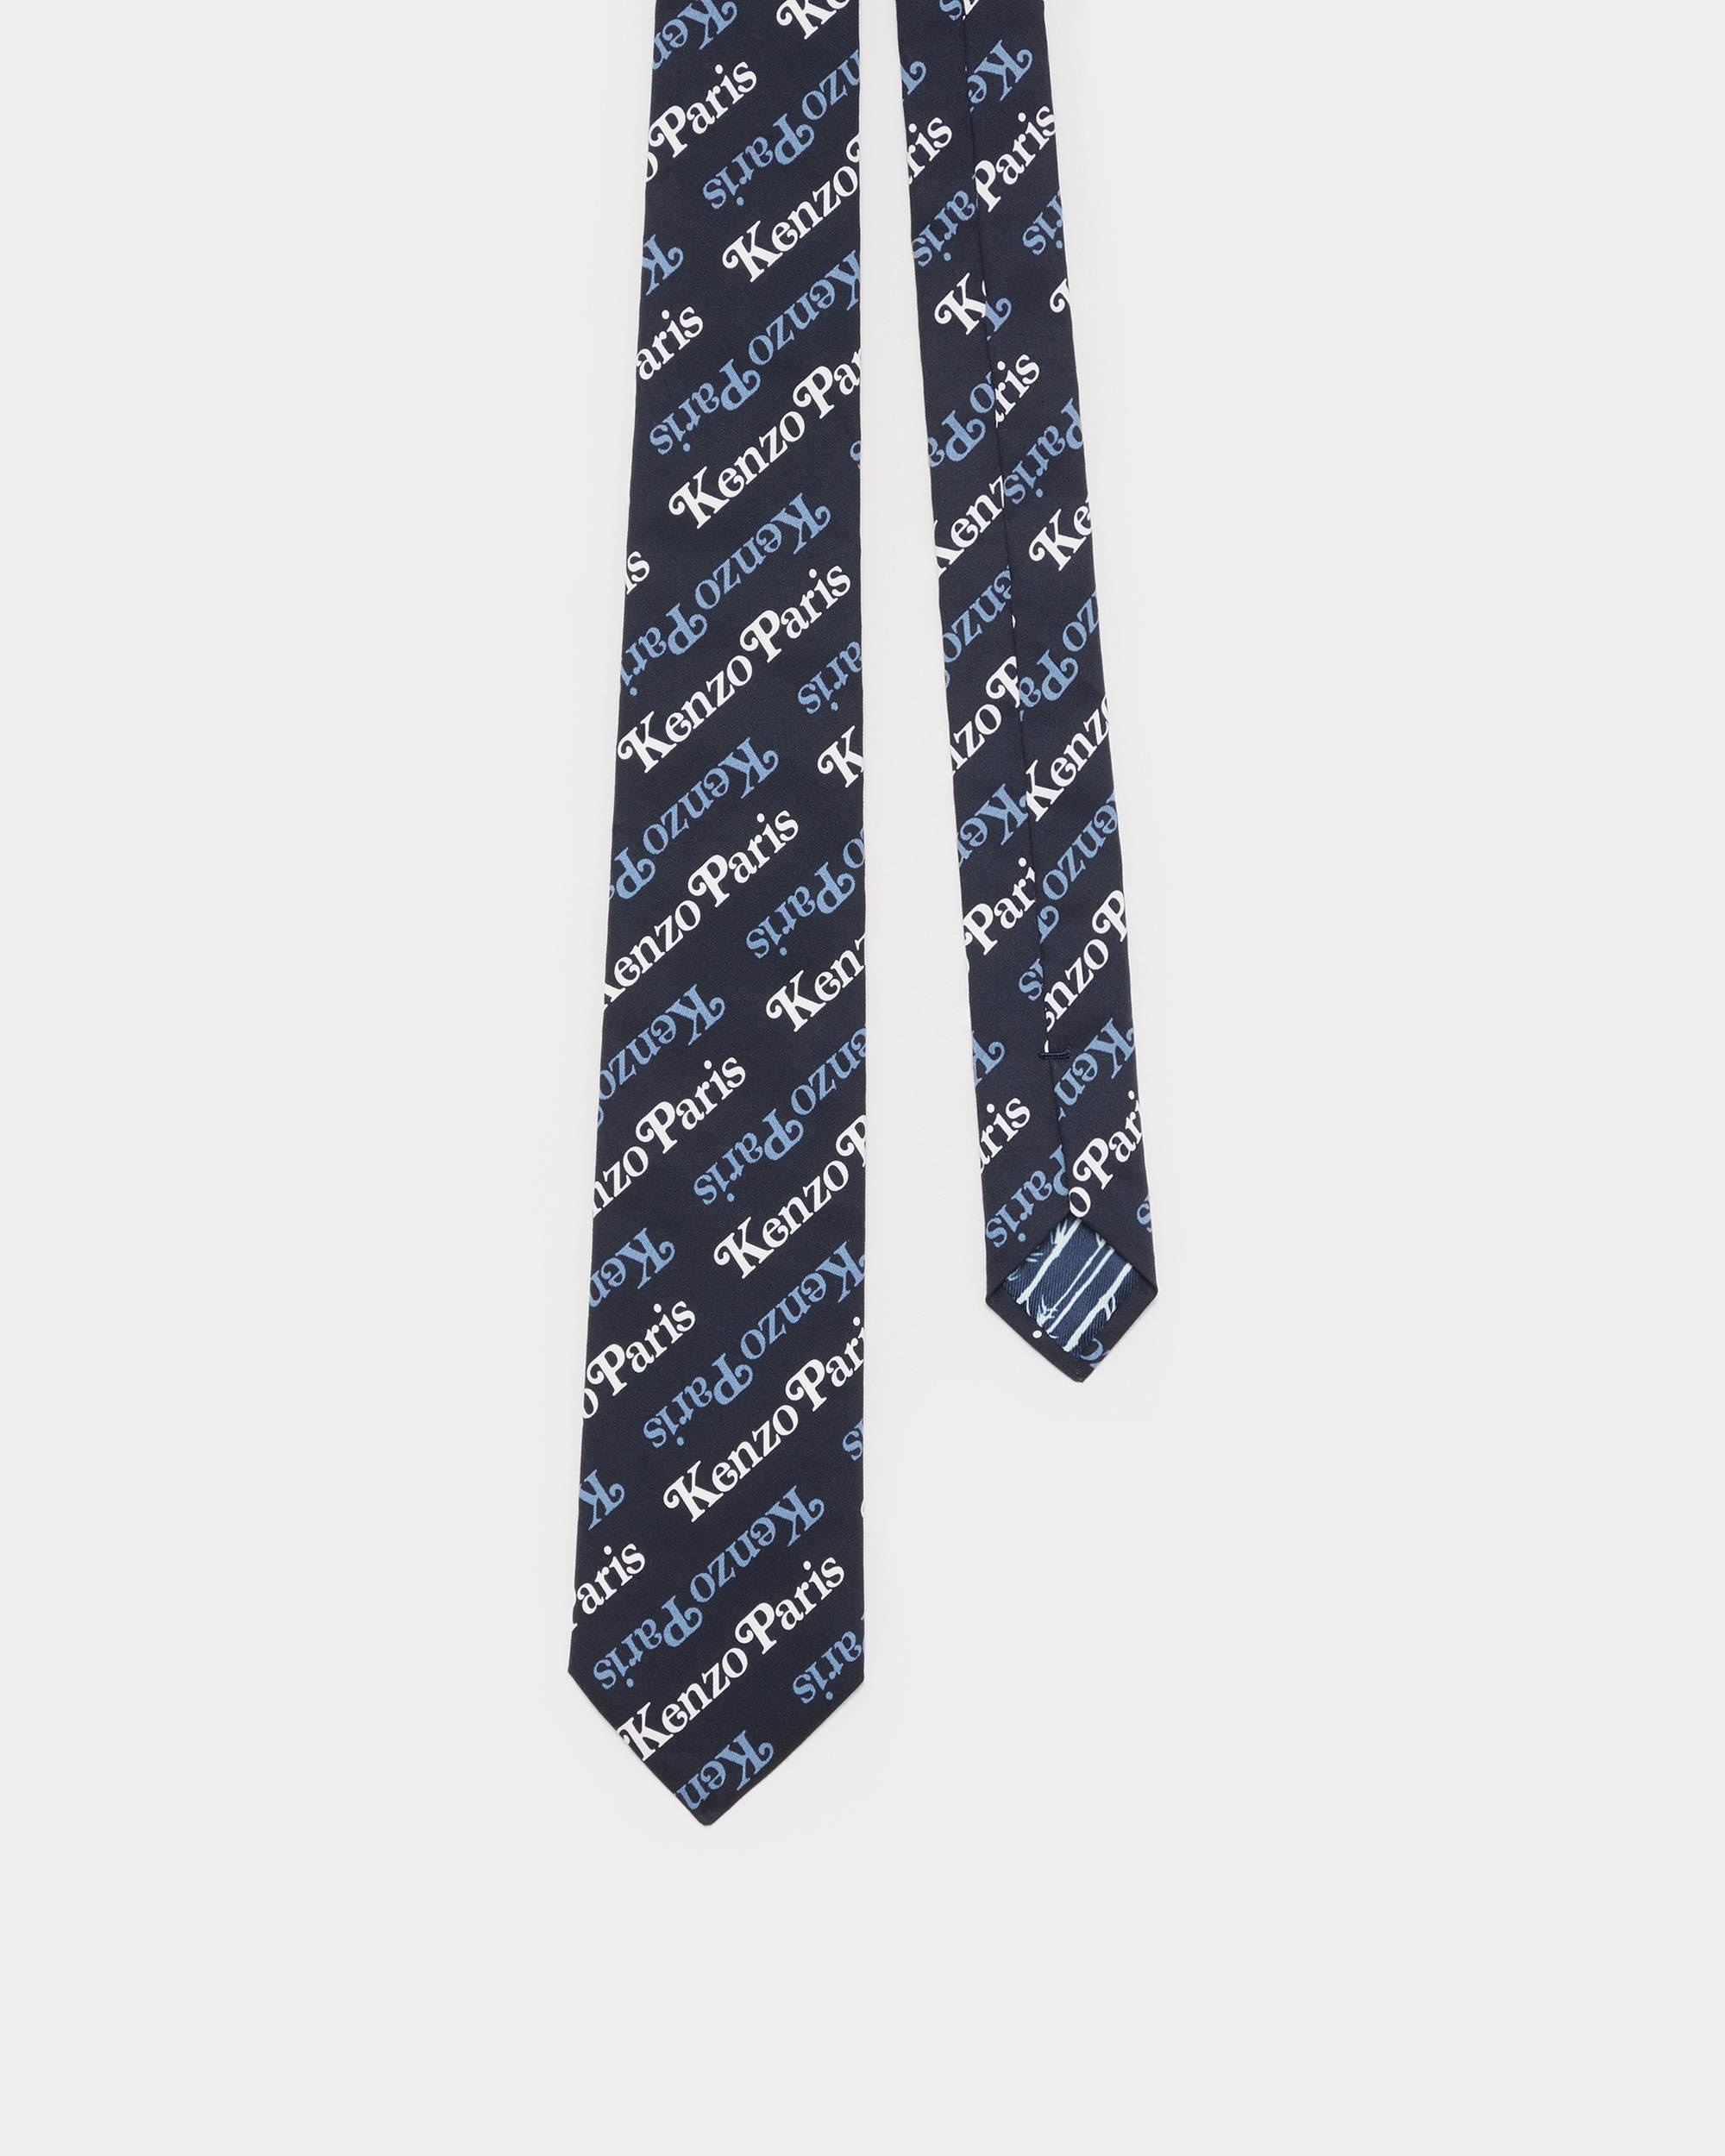 'KENZOGRAM' cotton tie - 2